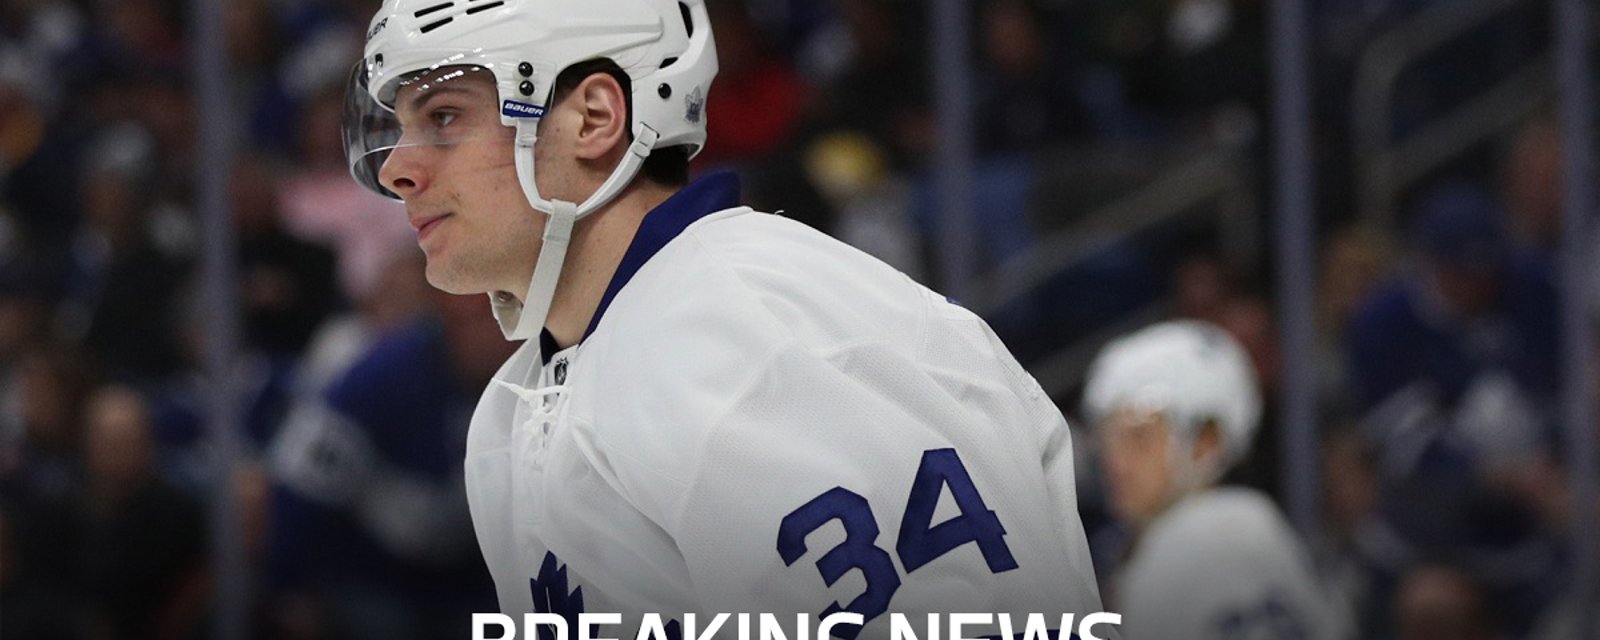 Breaking: More bad news for Maple Leafs superstar Auston Matthews,